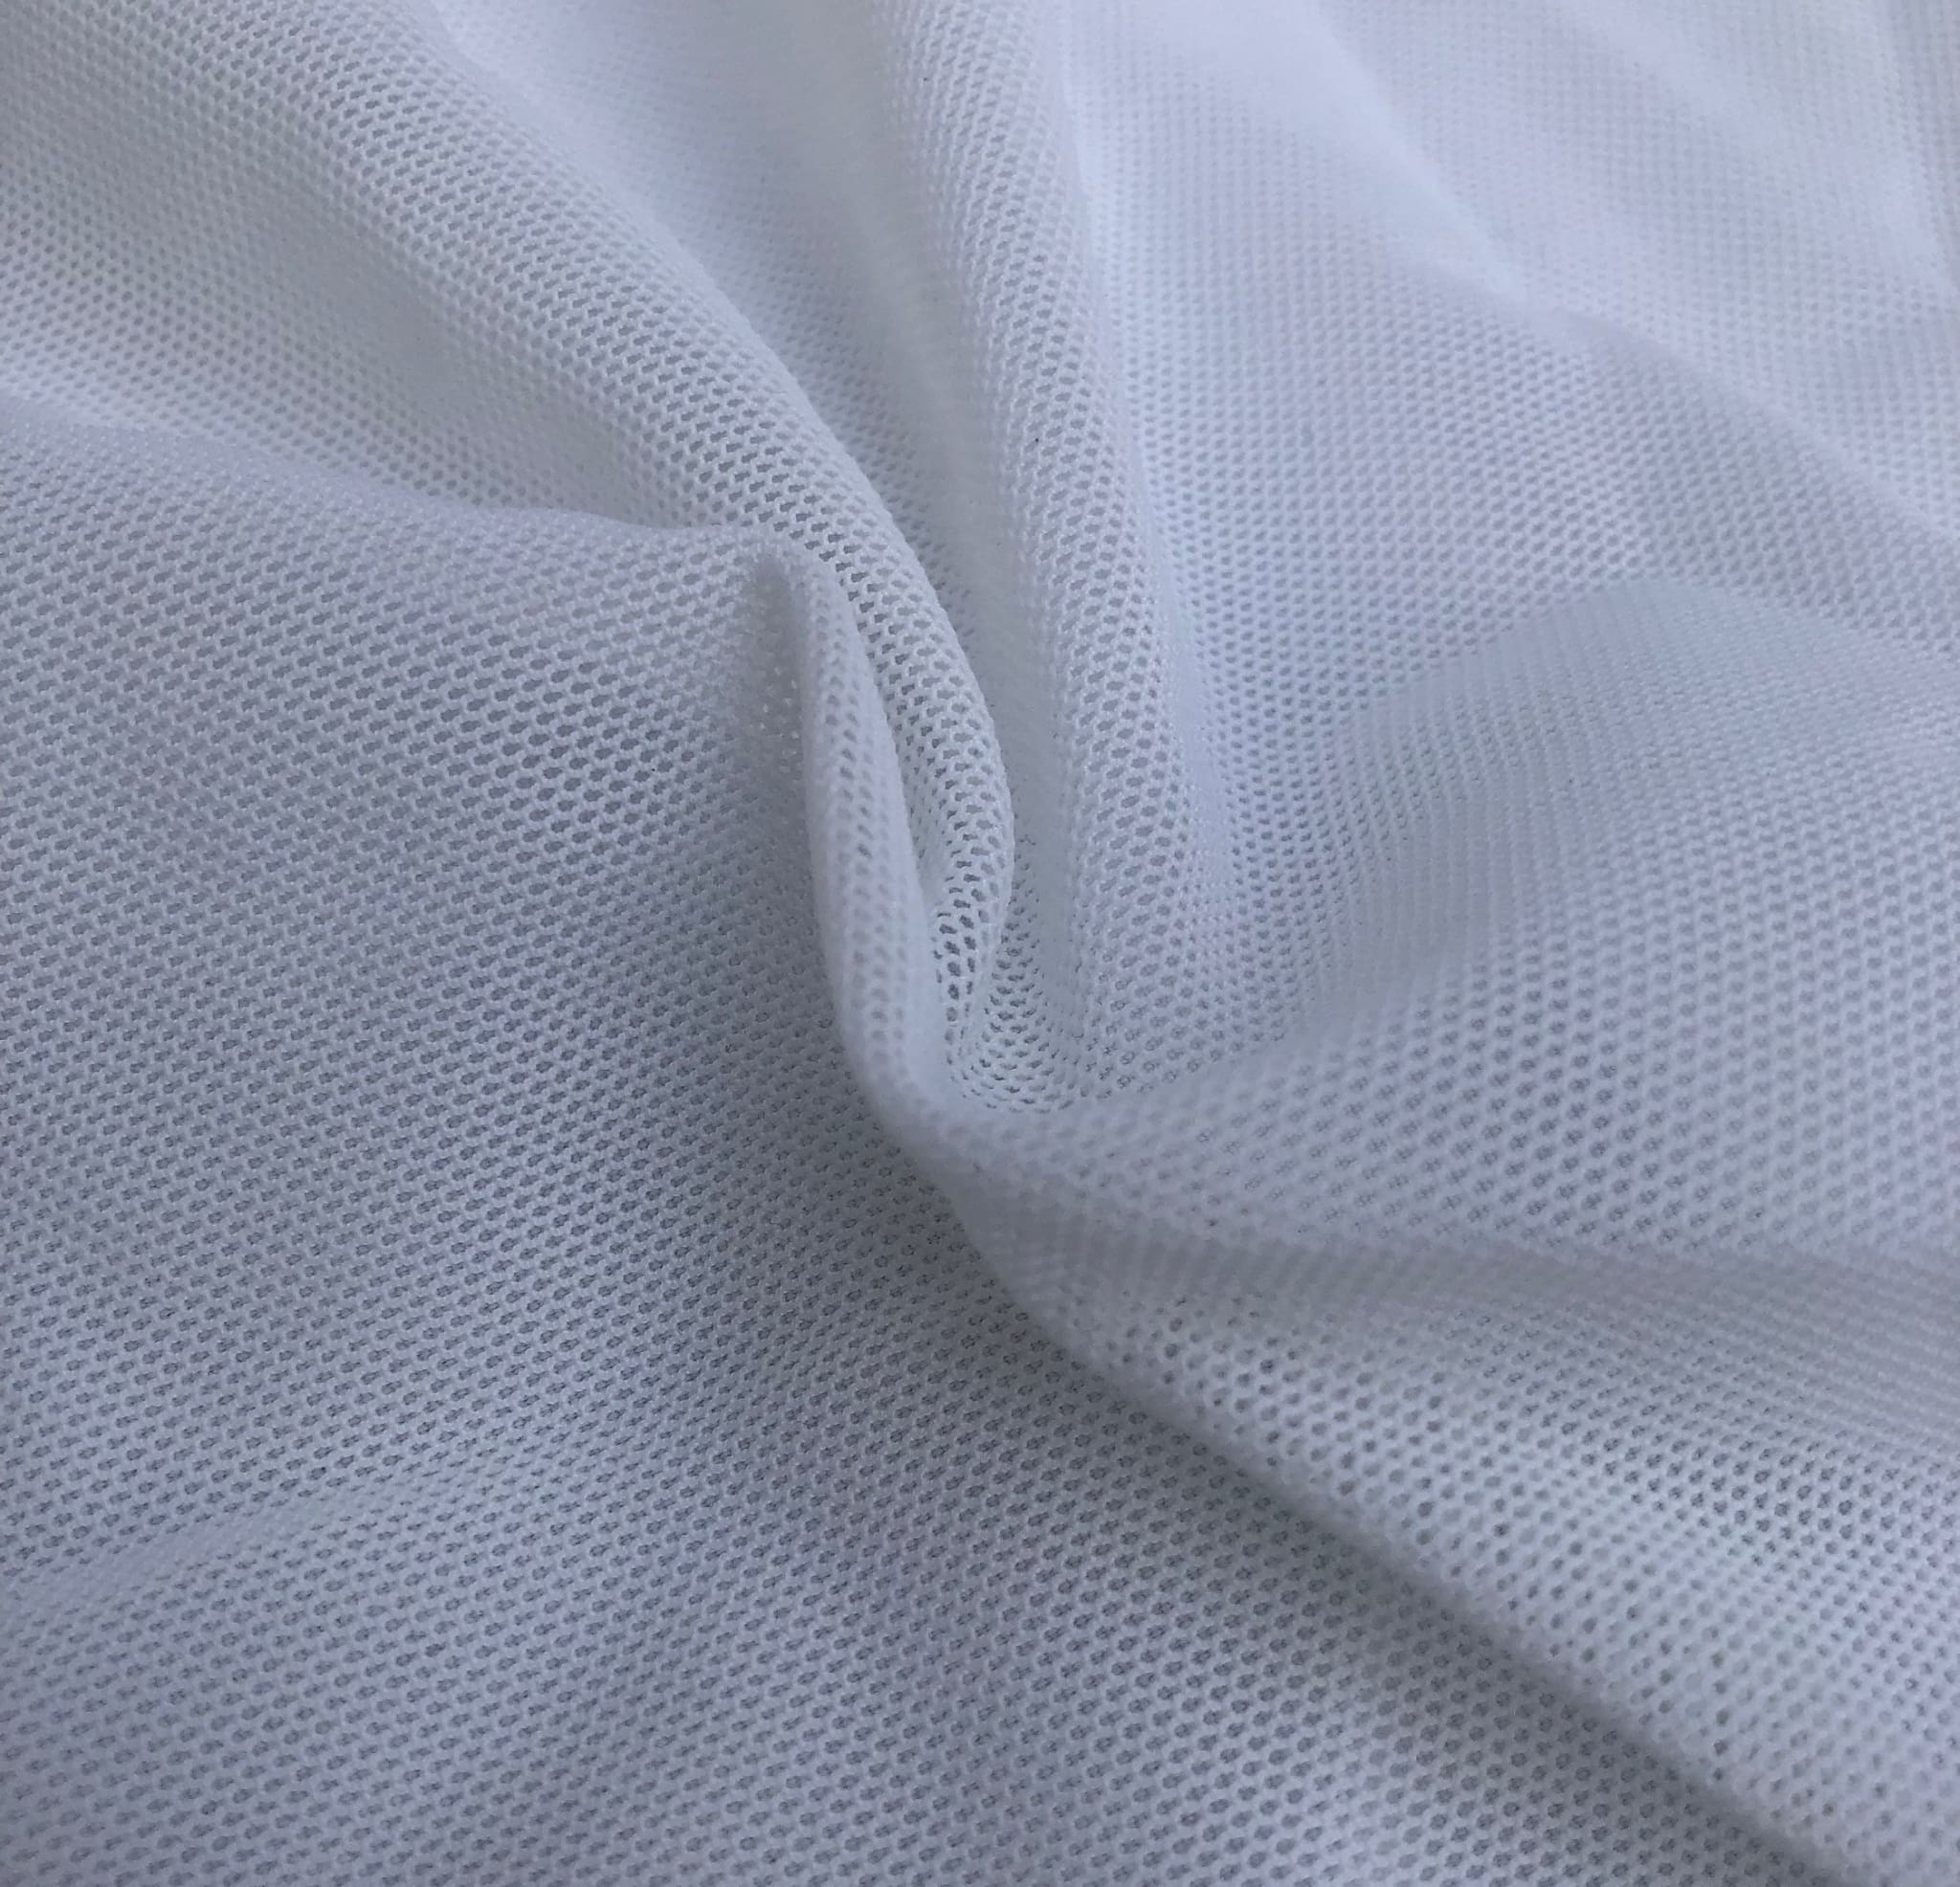 56 Optic White Nylon Spandex Blend Power Mesh Woven Fabric By the Yard